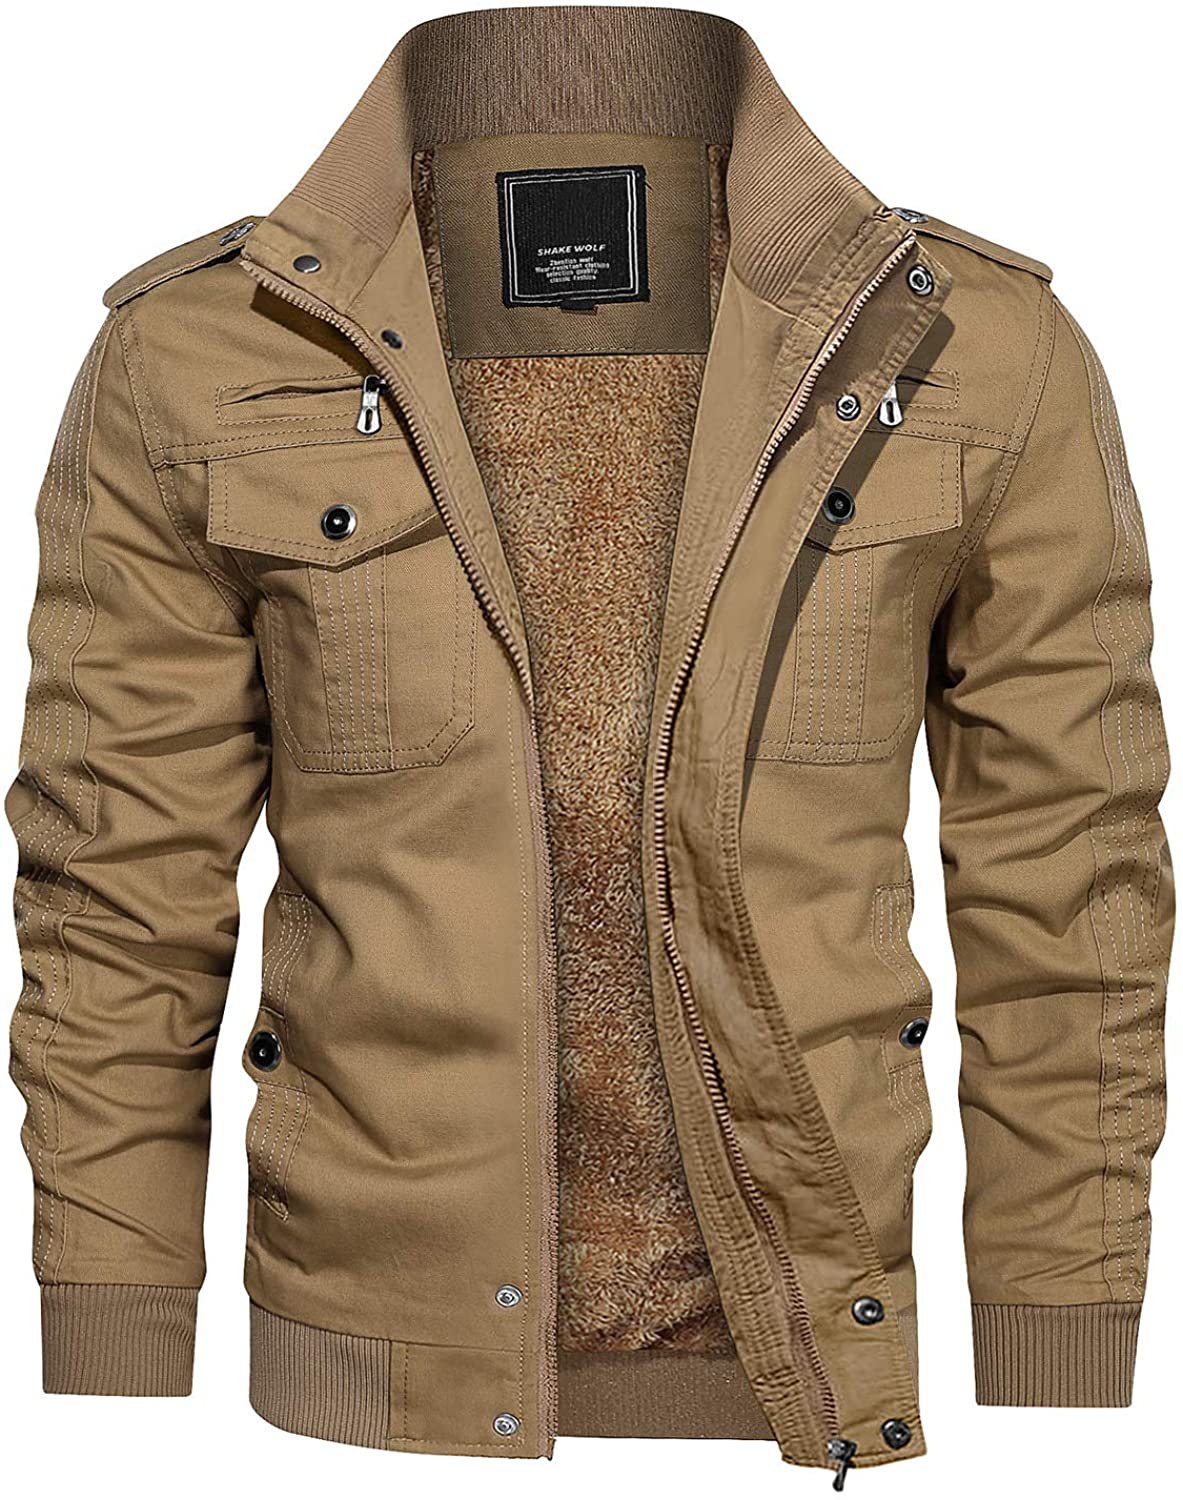 CRYSULLY Men's Winter Casual Thicken Multi-Pocket Field Jacket Outwear ...